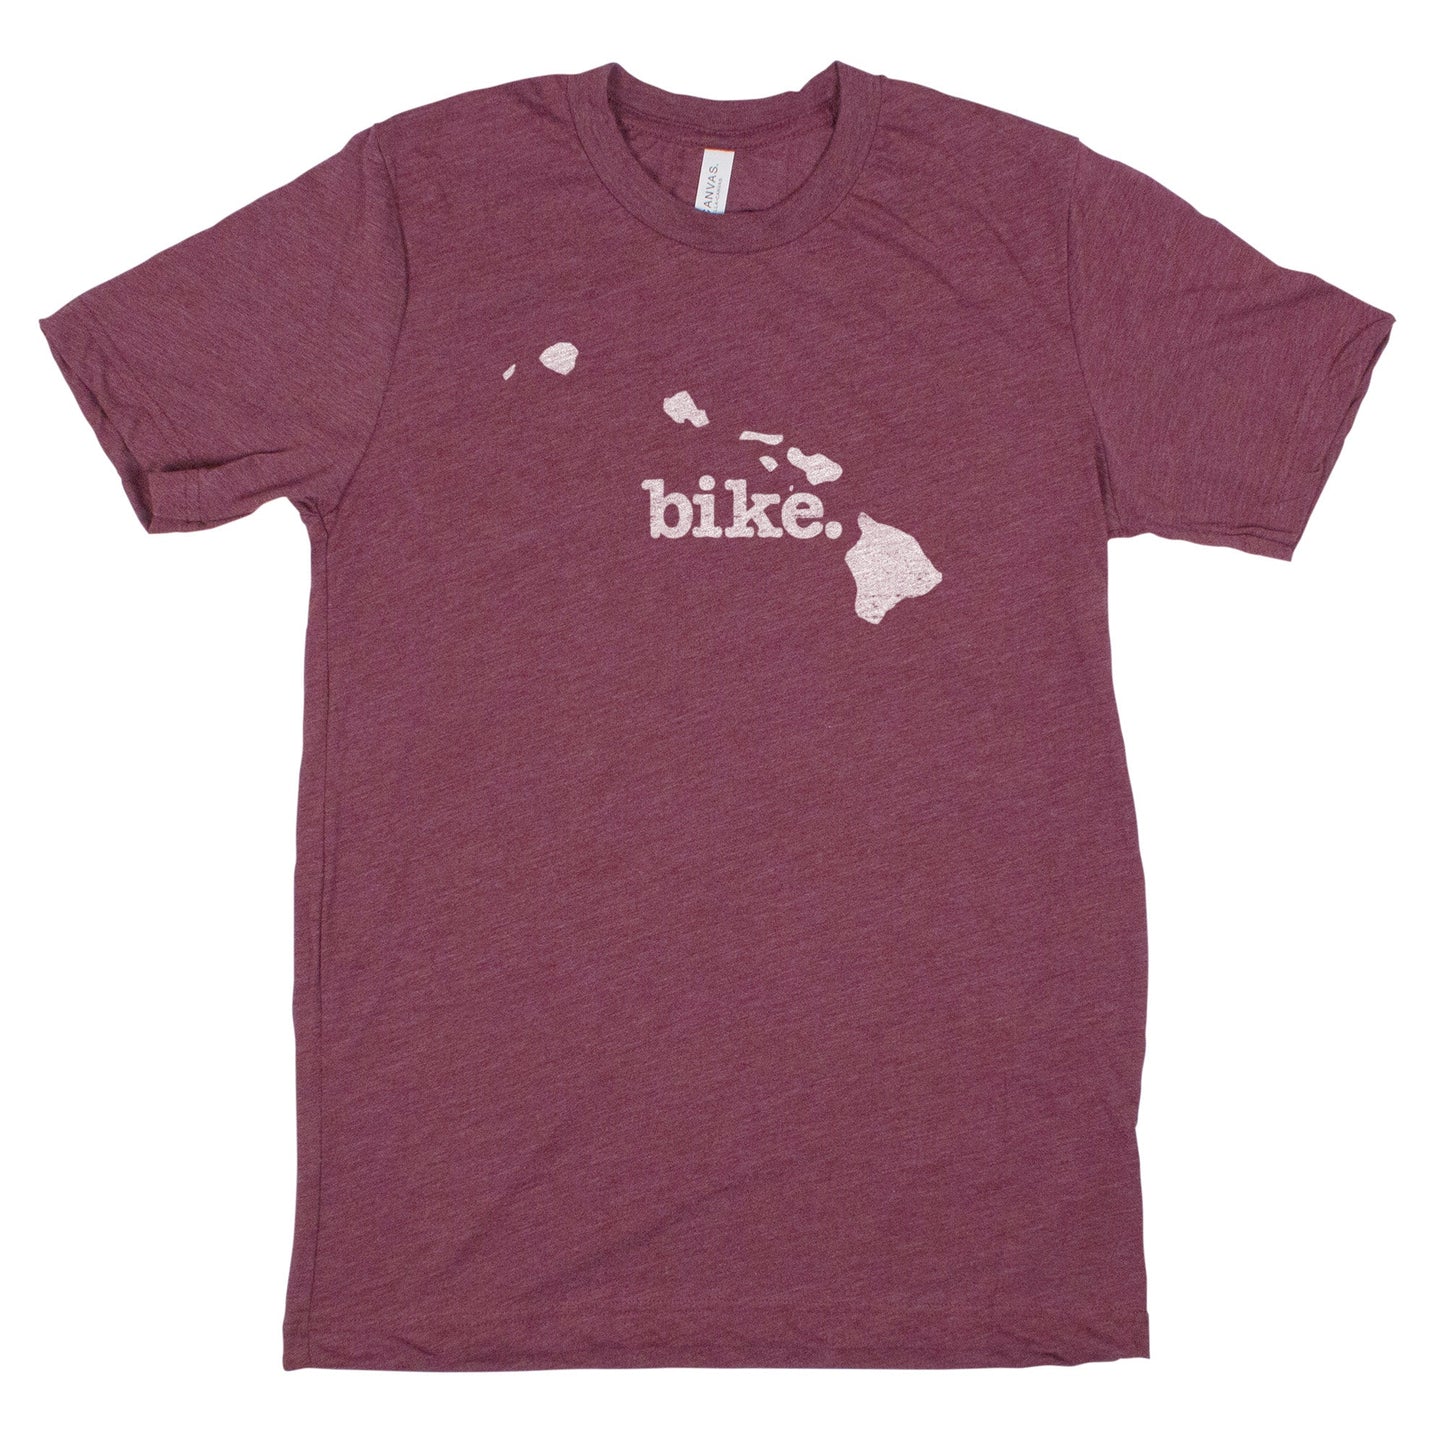 bike. Men's Unisex T-Shirt - Hawaii